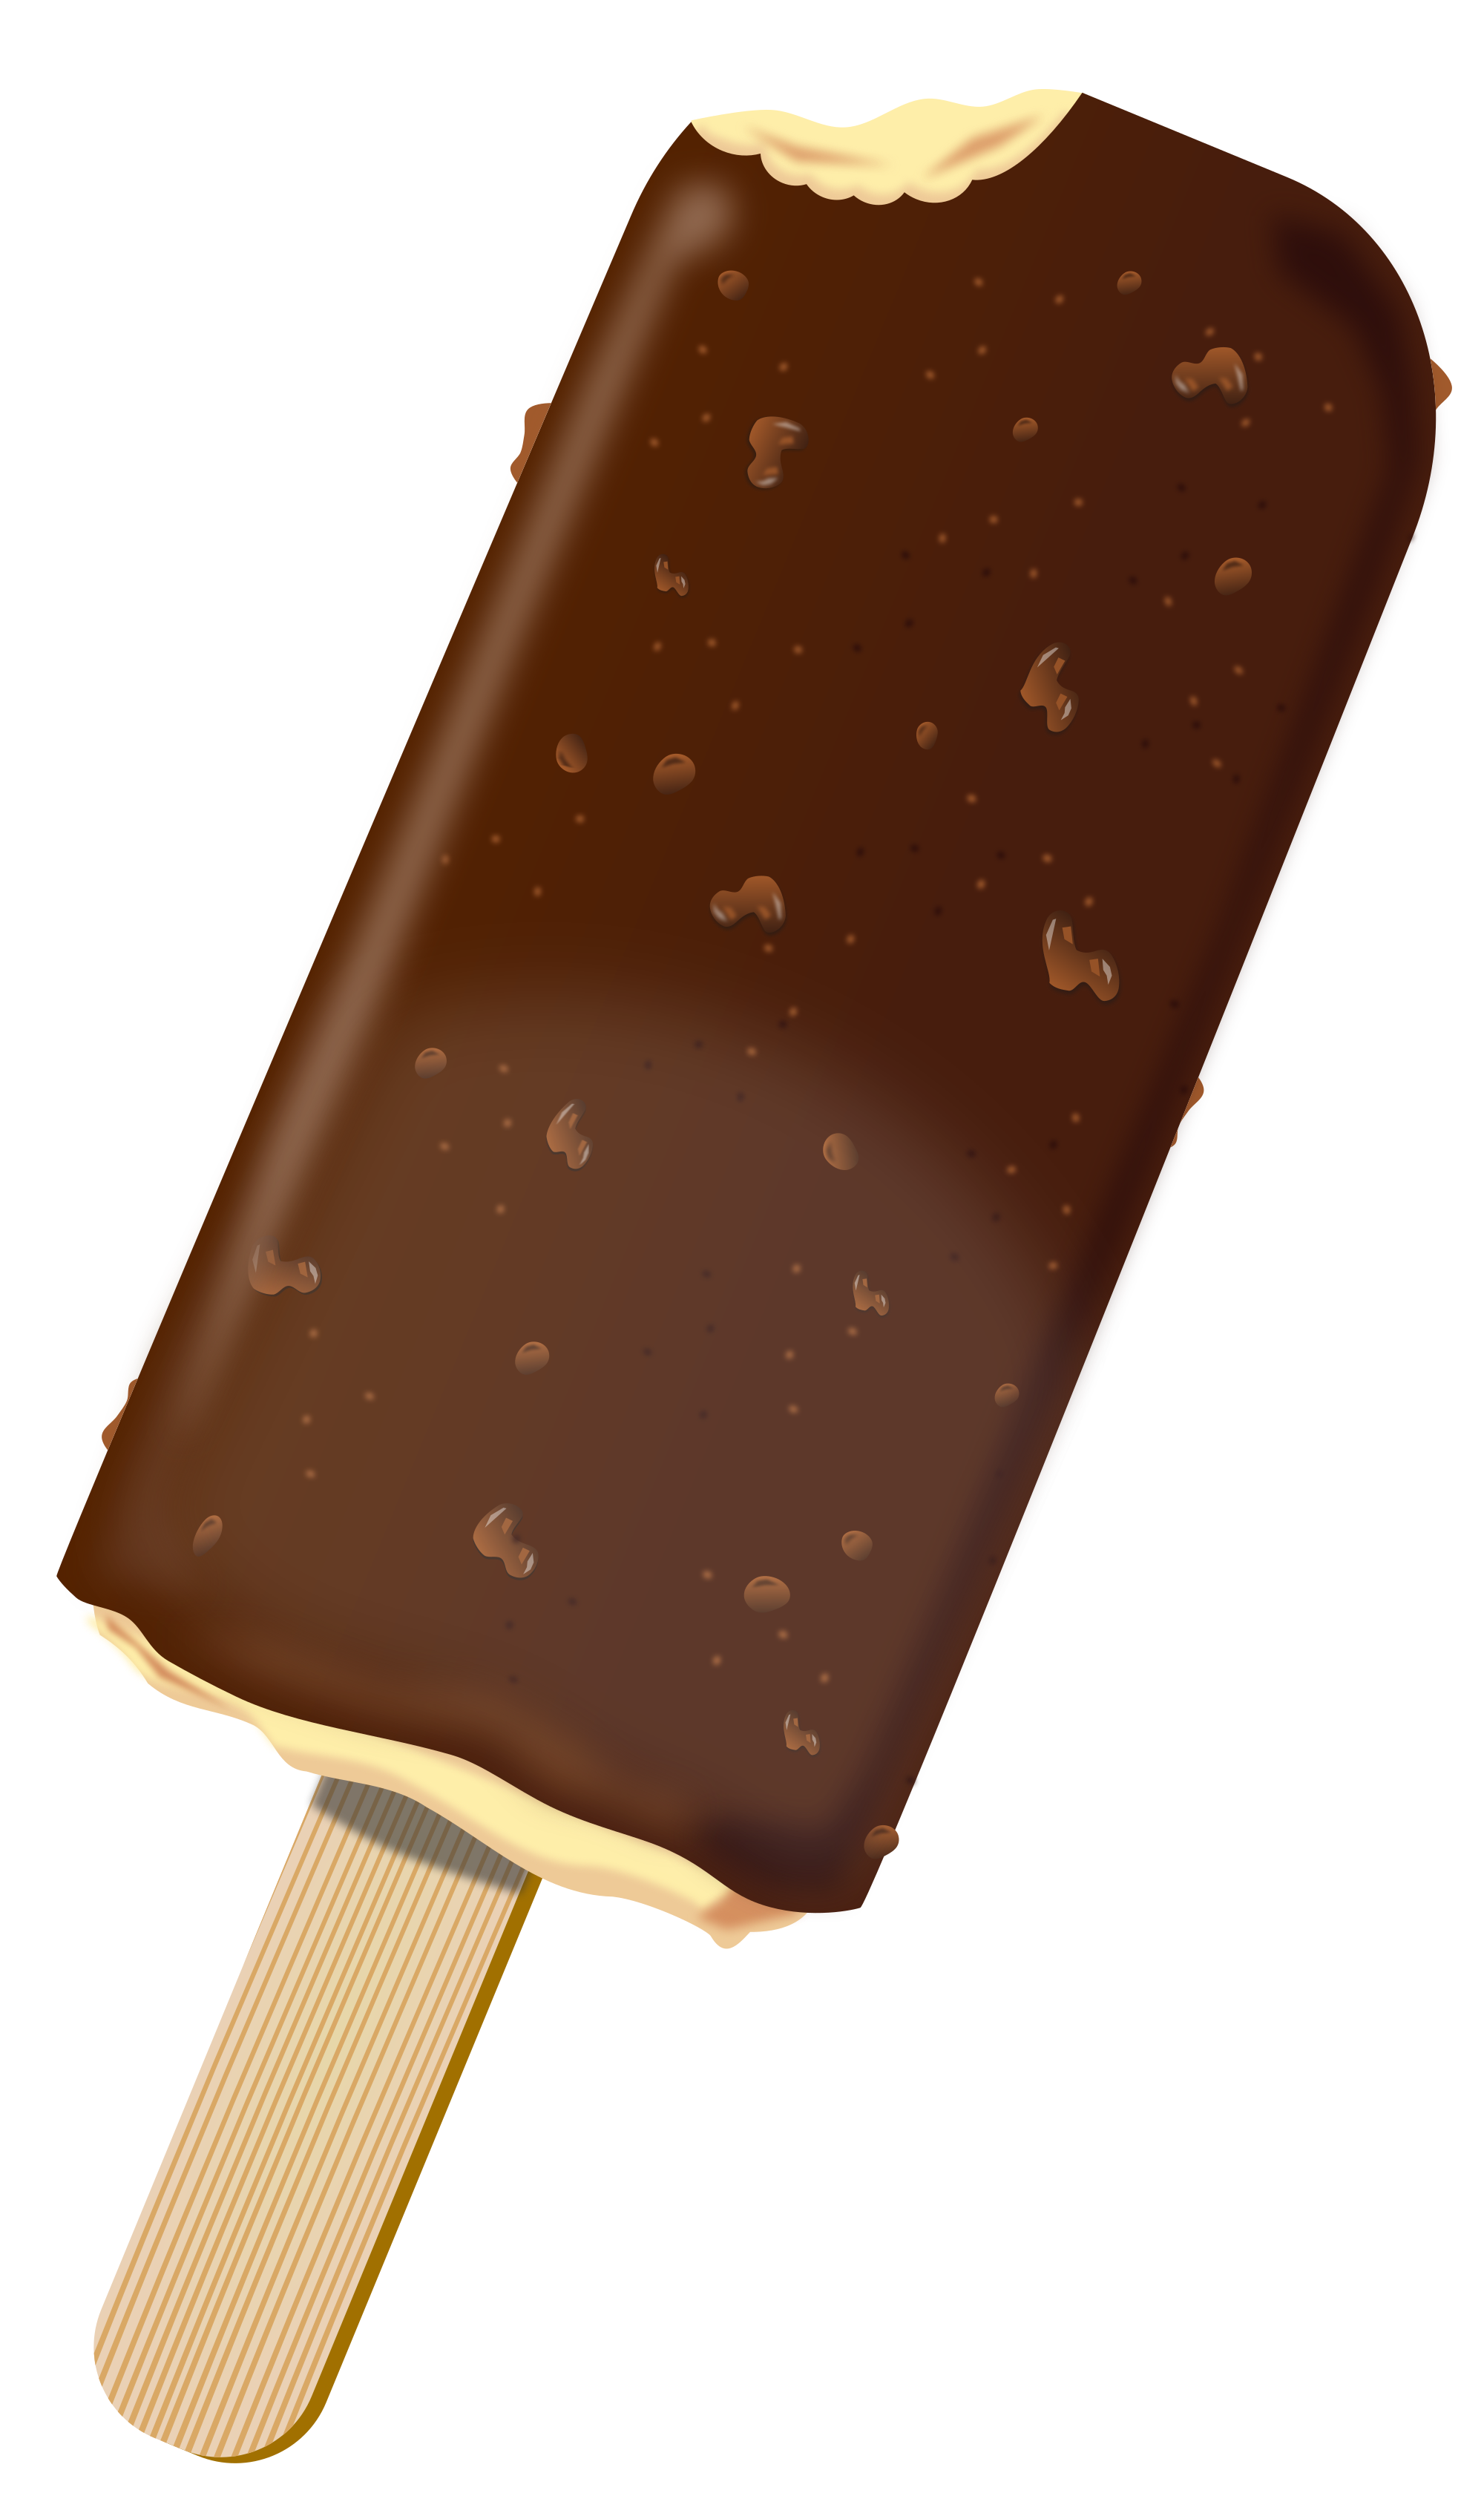 Icecream lollipop